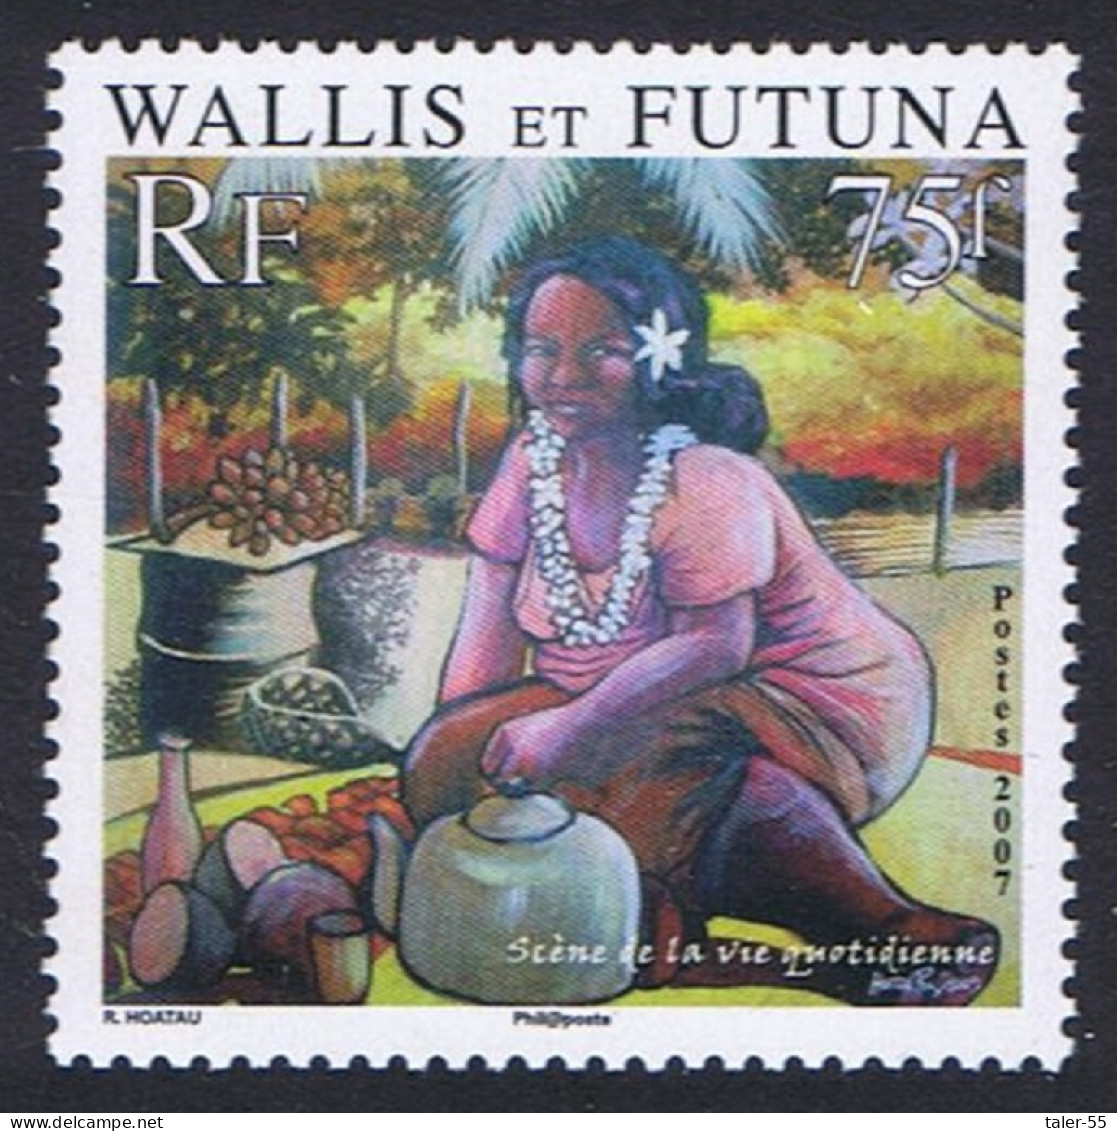 Wallis And Futuna Daily Life 2007 MNH SG#911 - Nuevos